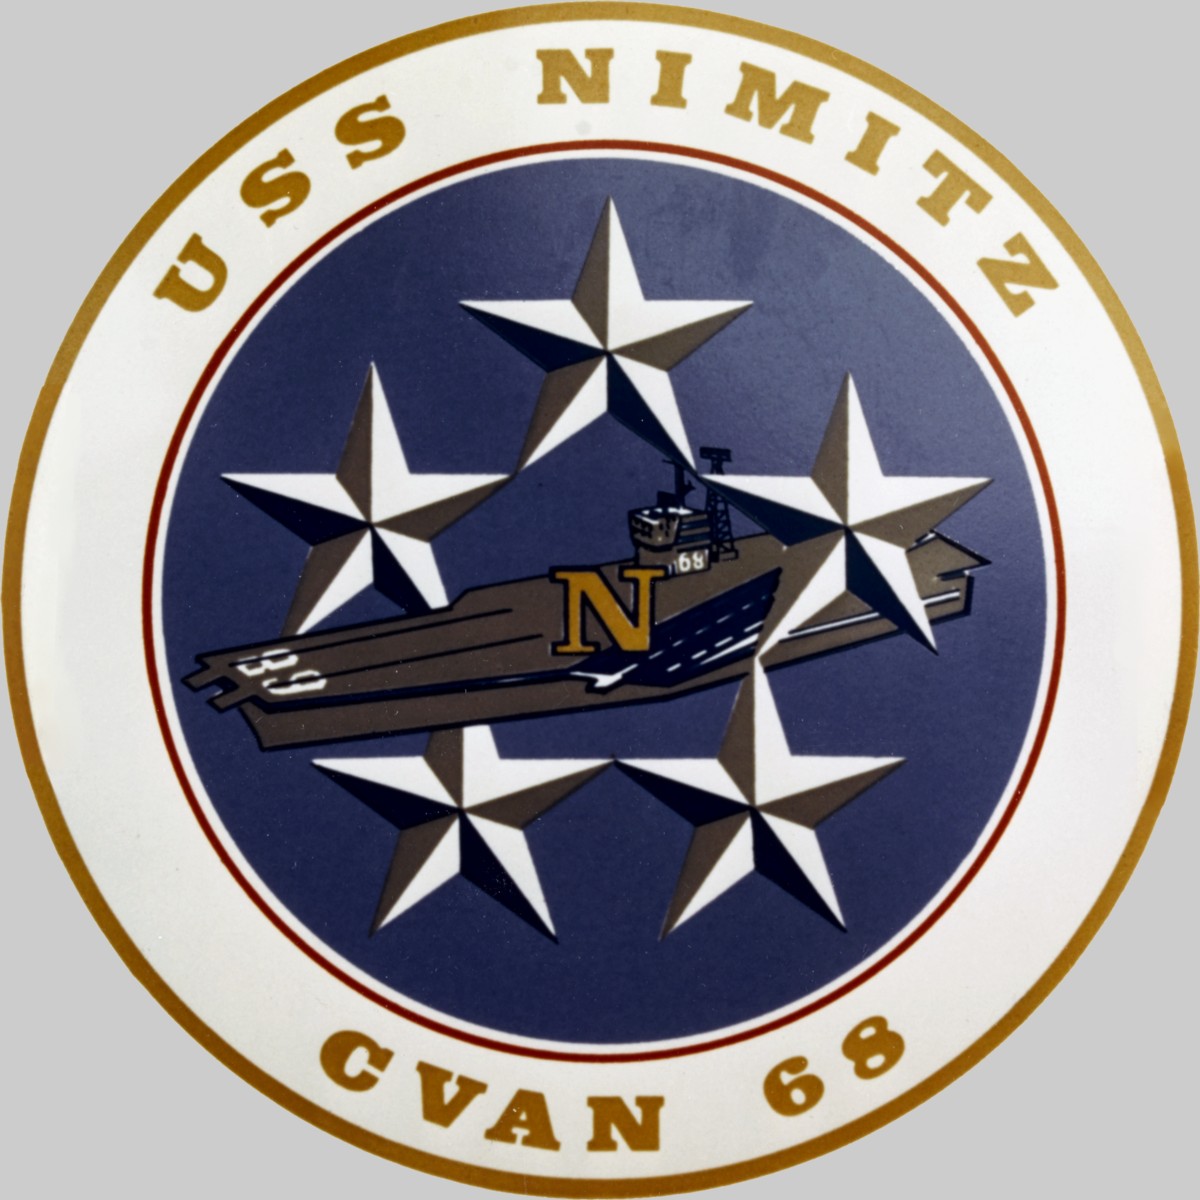 cvn-68 uss nimitz crest insignia patch badge aircraft carrier us navy 03c